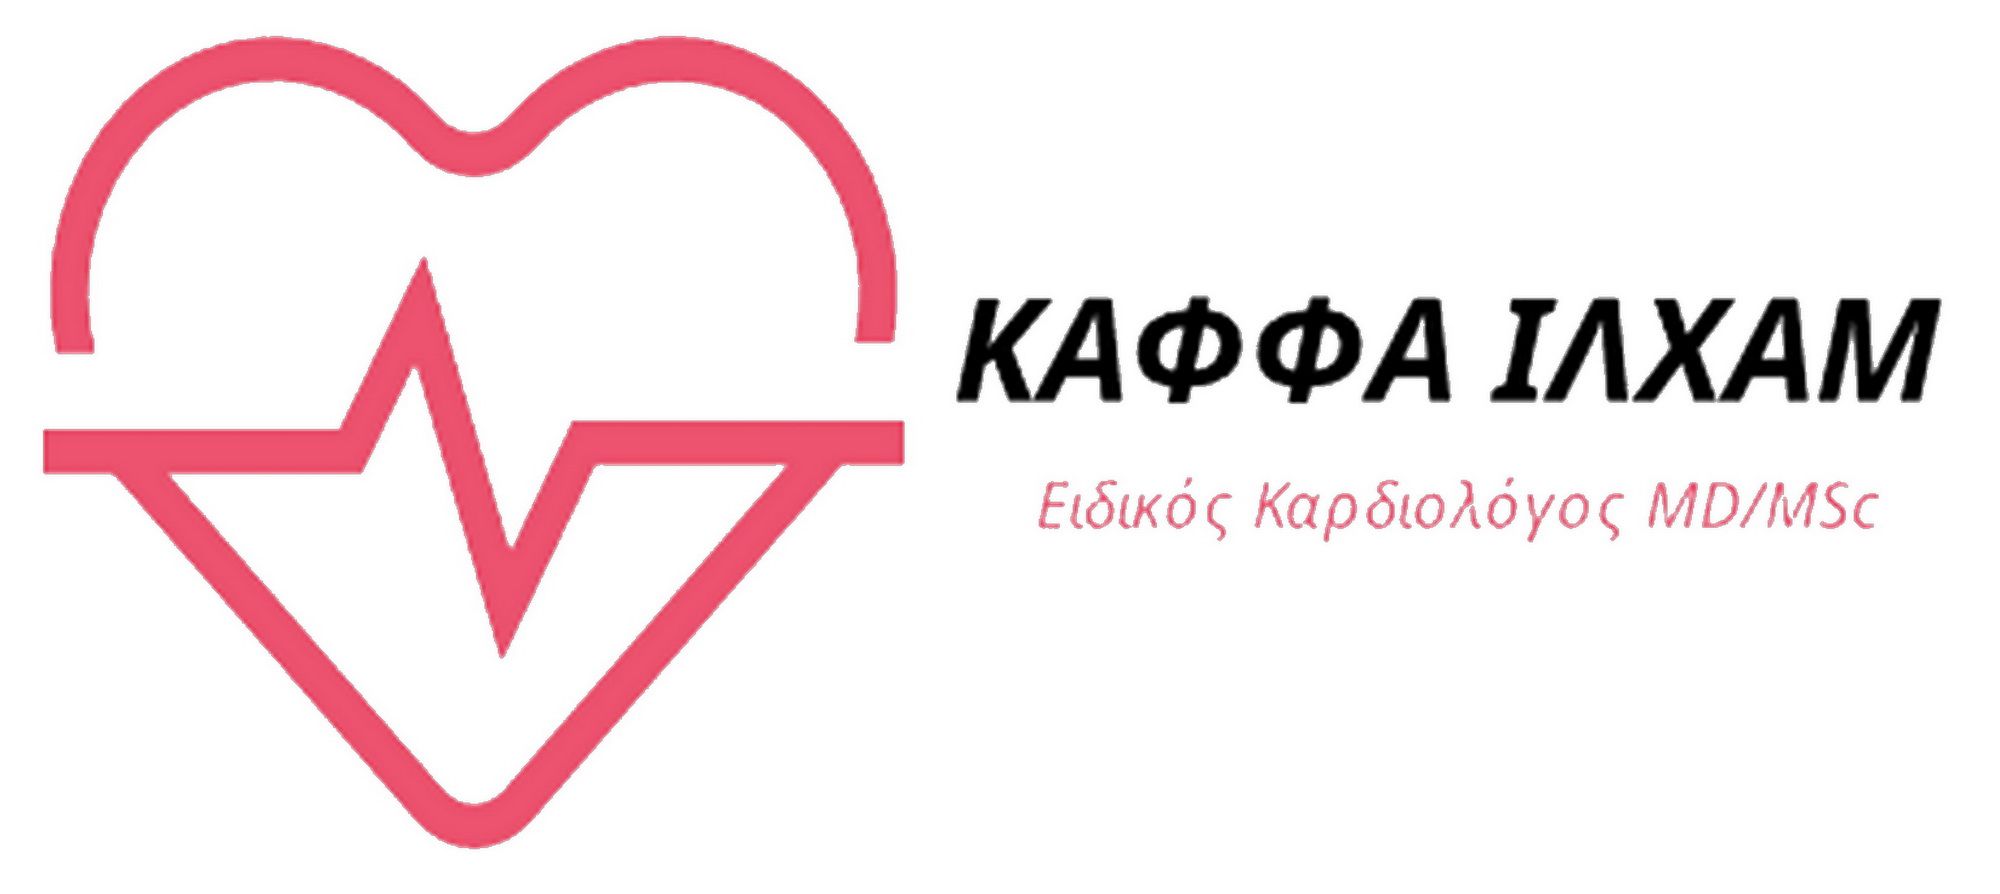 Cardiologist ILHAM KAFFA Logo